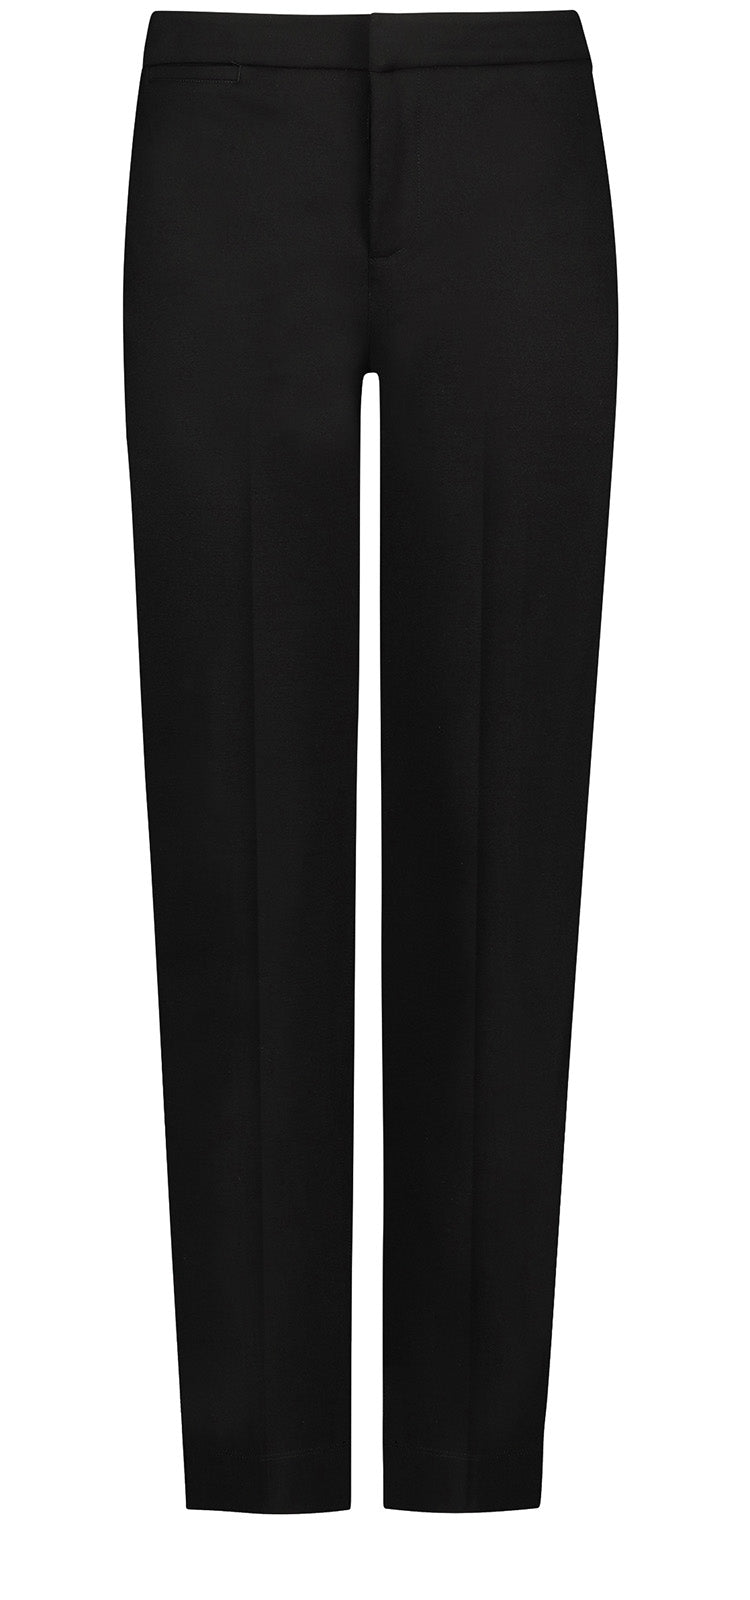 Slim Trouser Black (Petite)| NYDJ – NYDJ UK